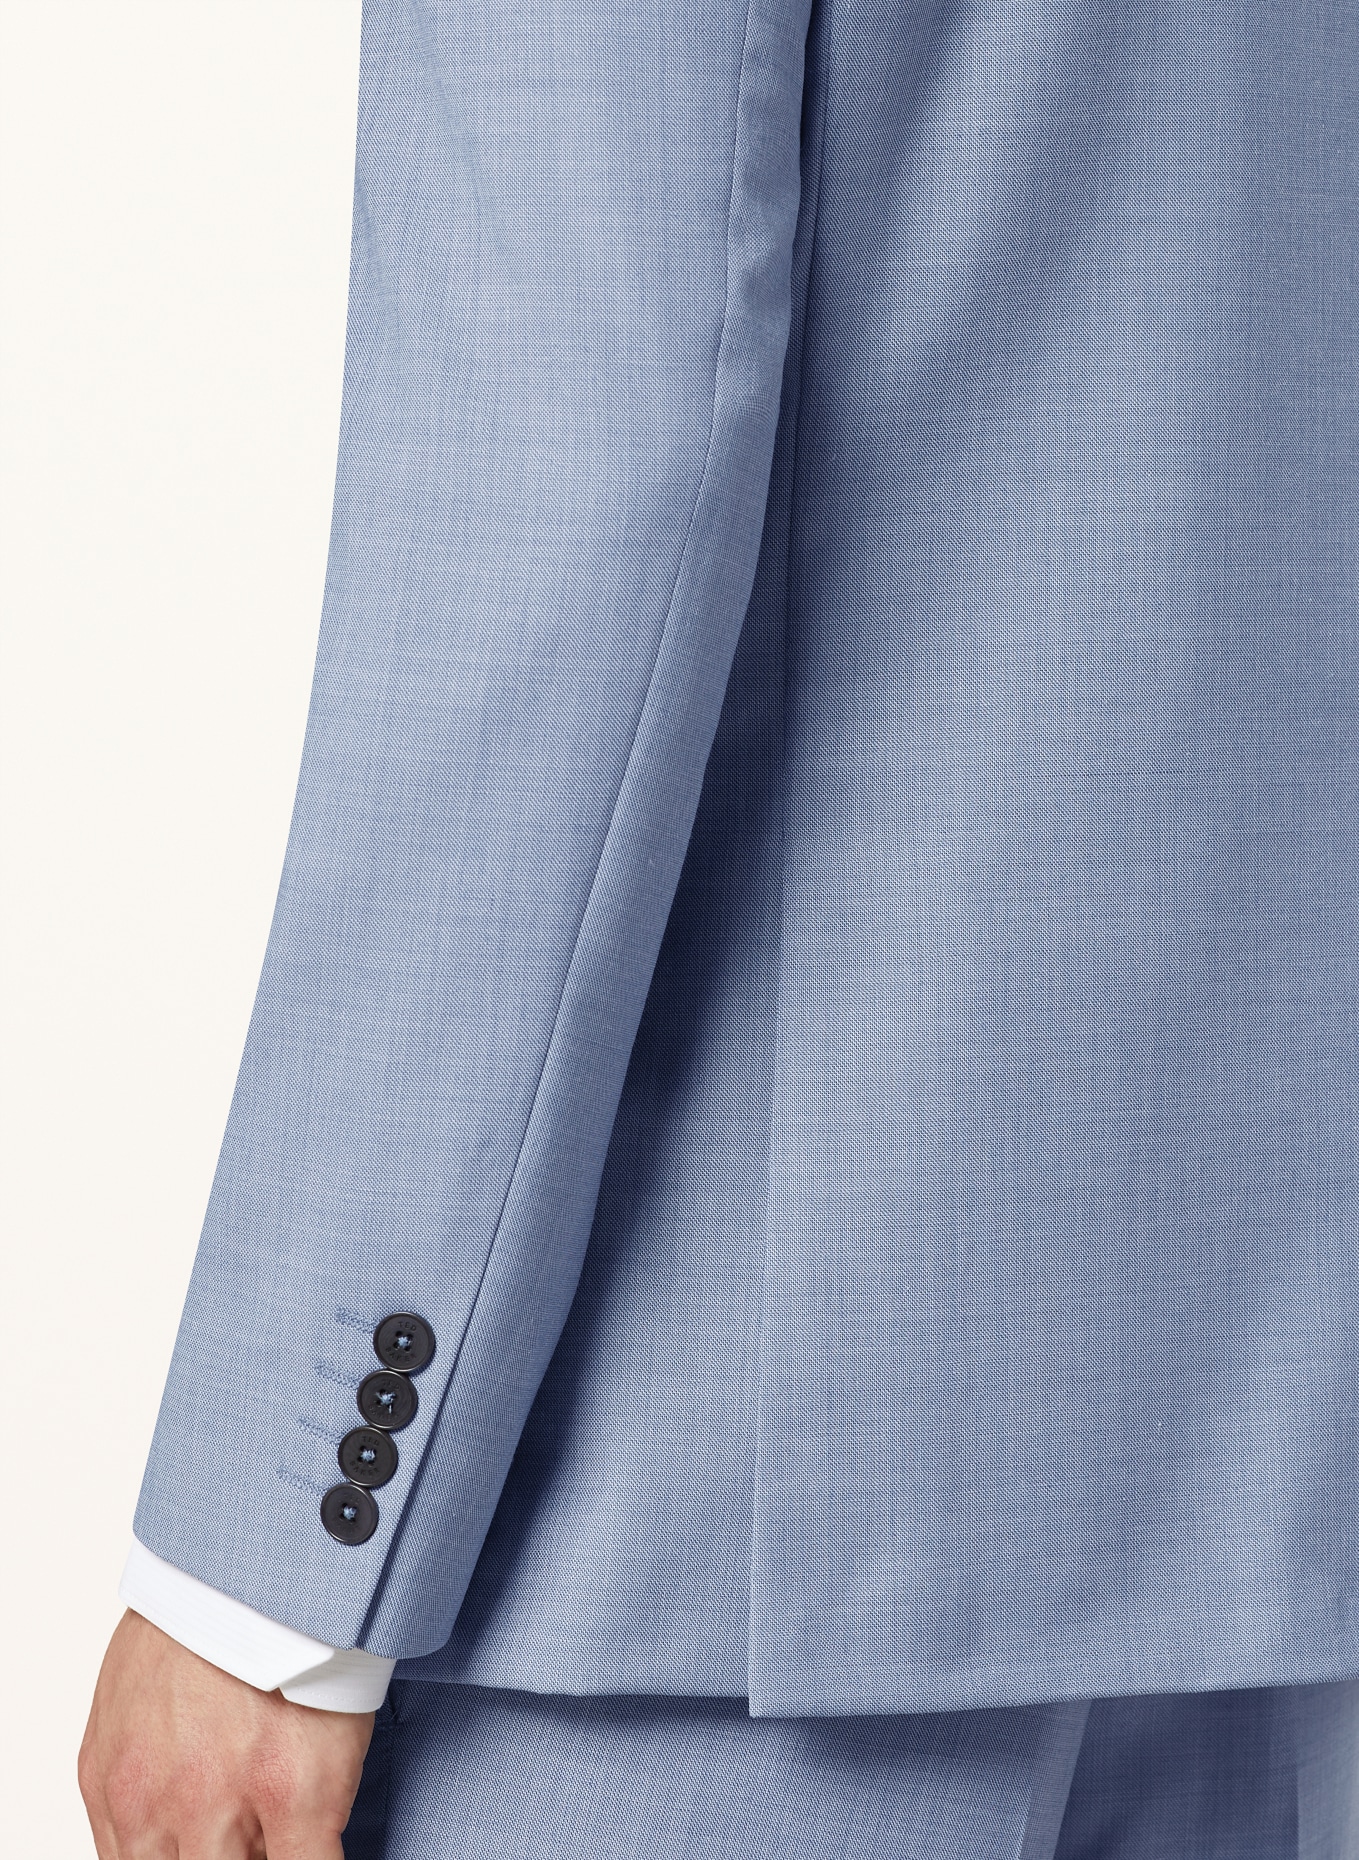 TED BAKER Anzugsakko ORION Slim Fit, Farbe: BLUE BLUE (Bild 6)